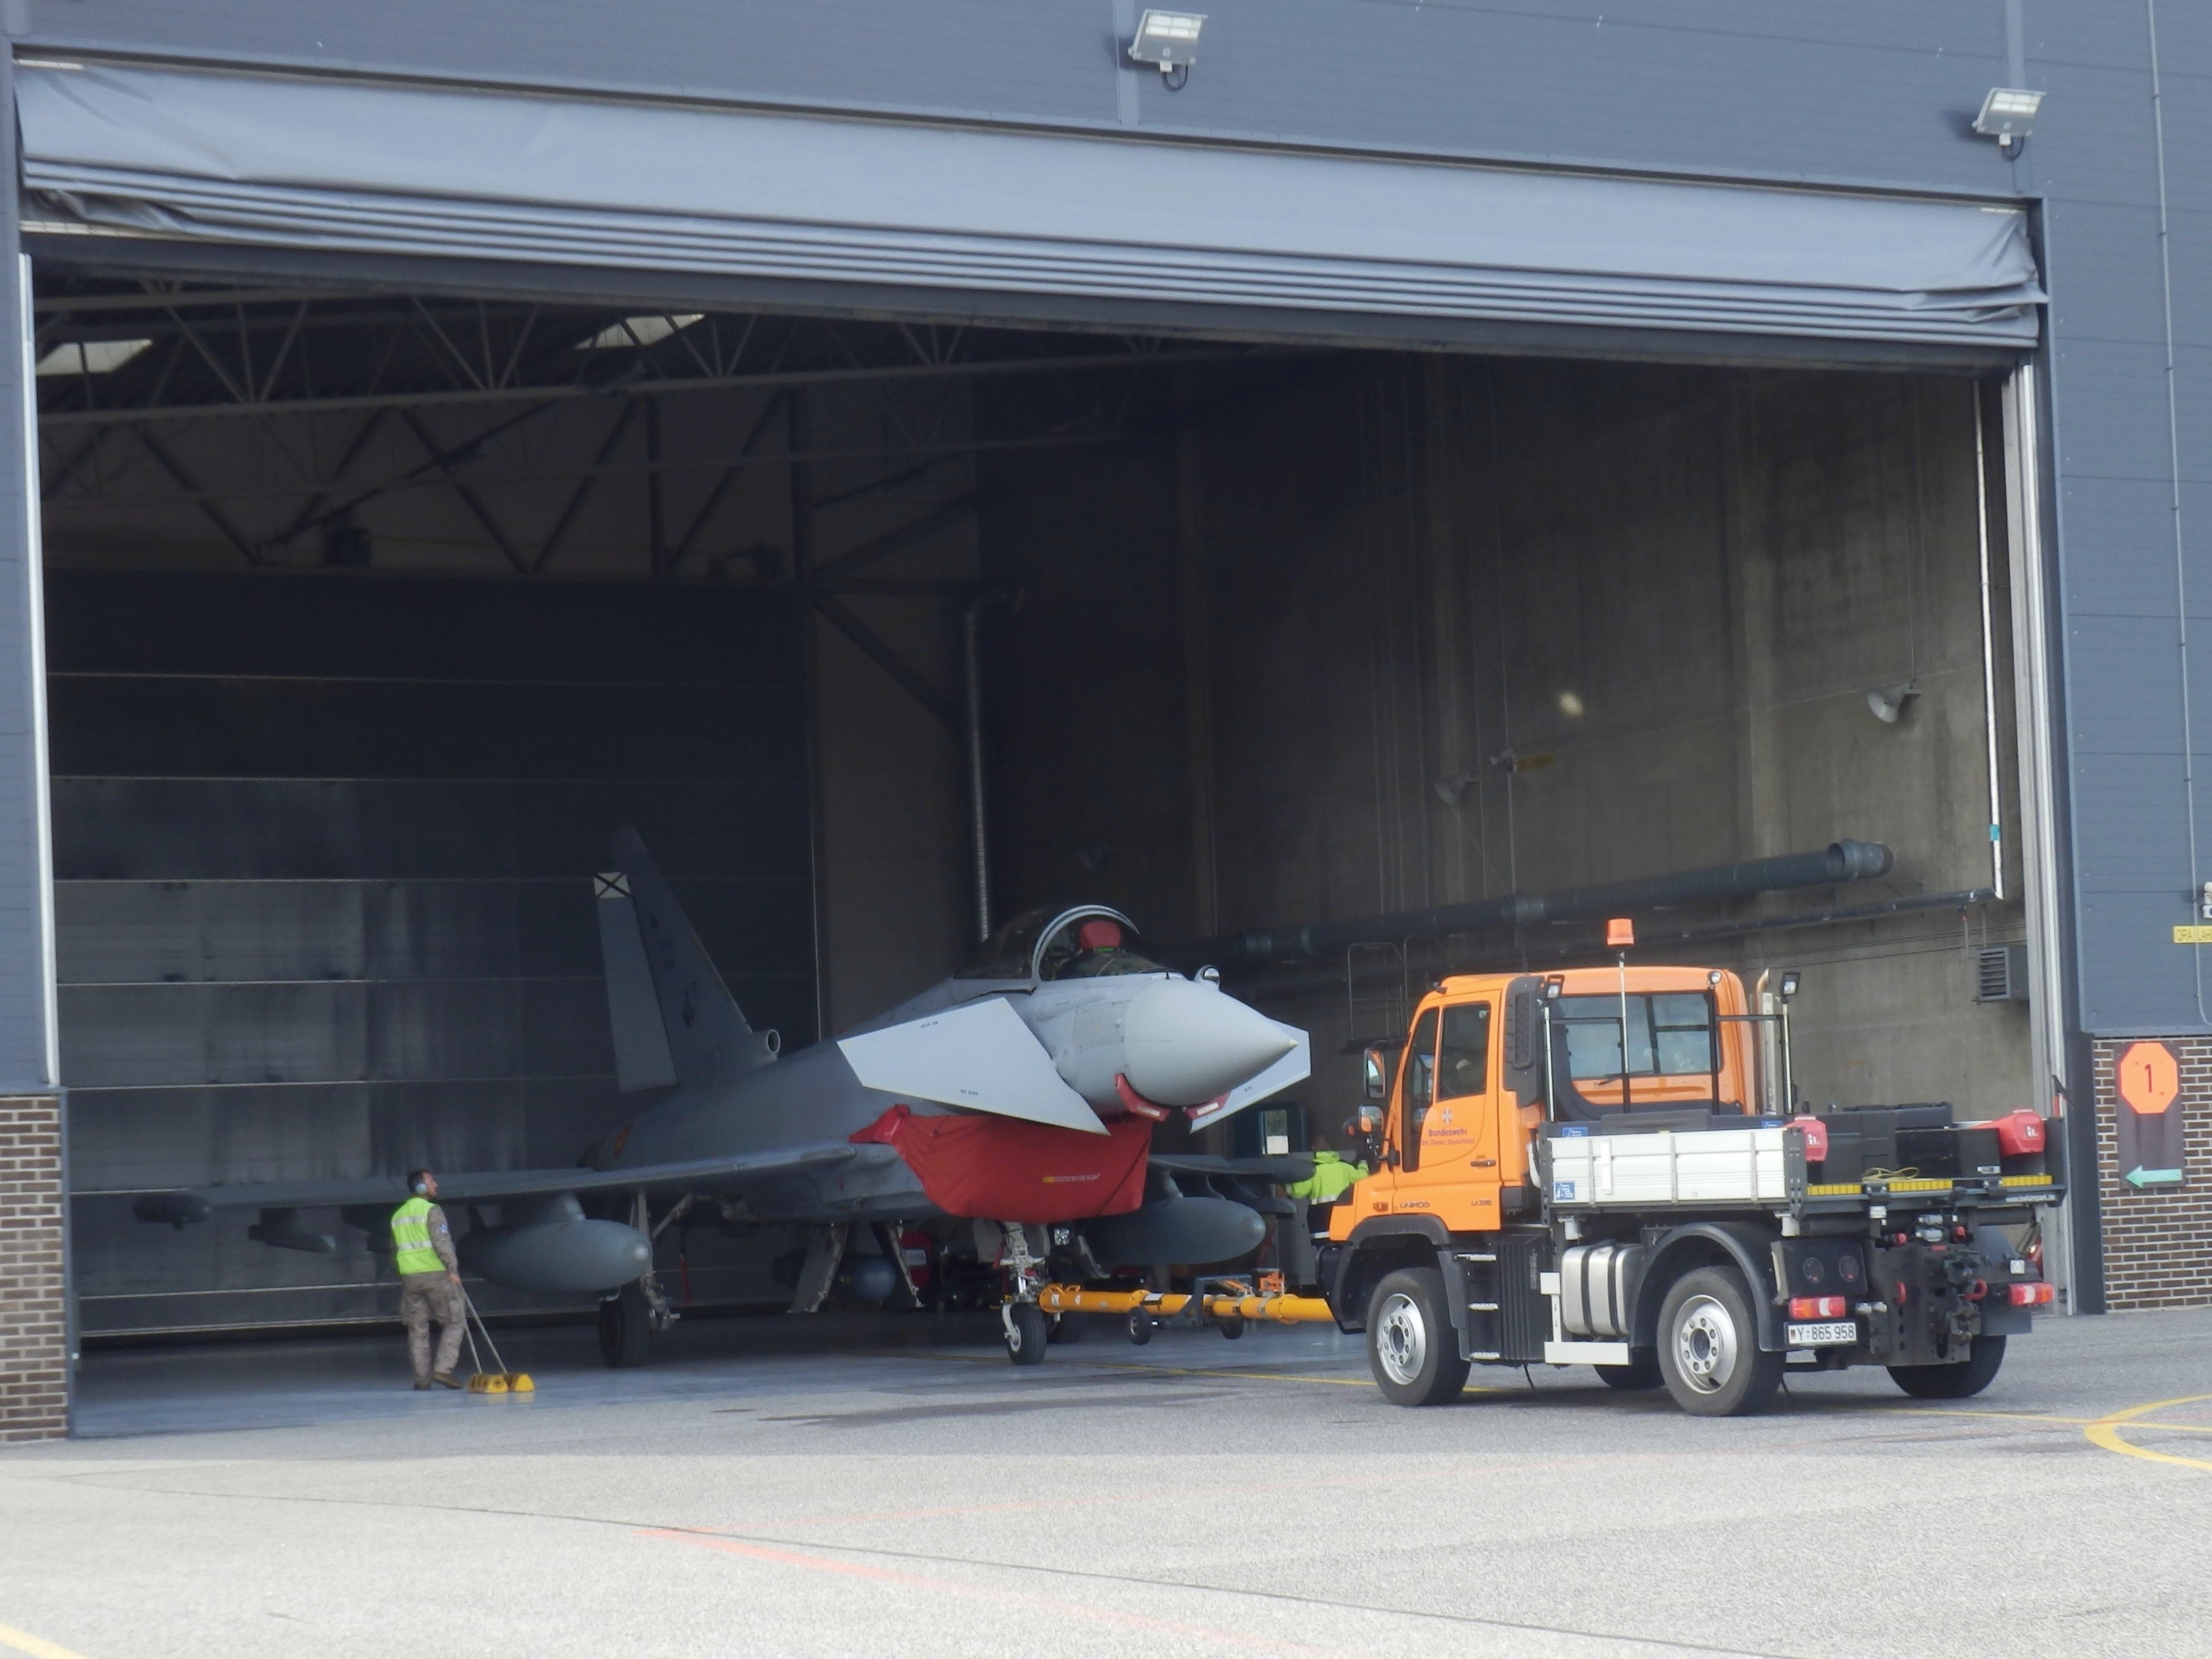 Spanish Eurofighter at the Amari Air Base